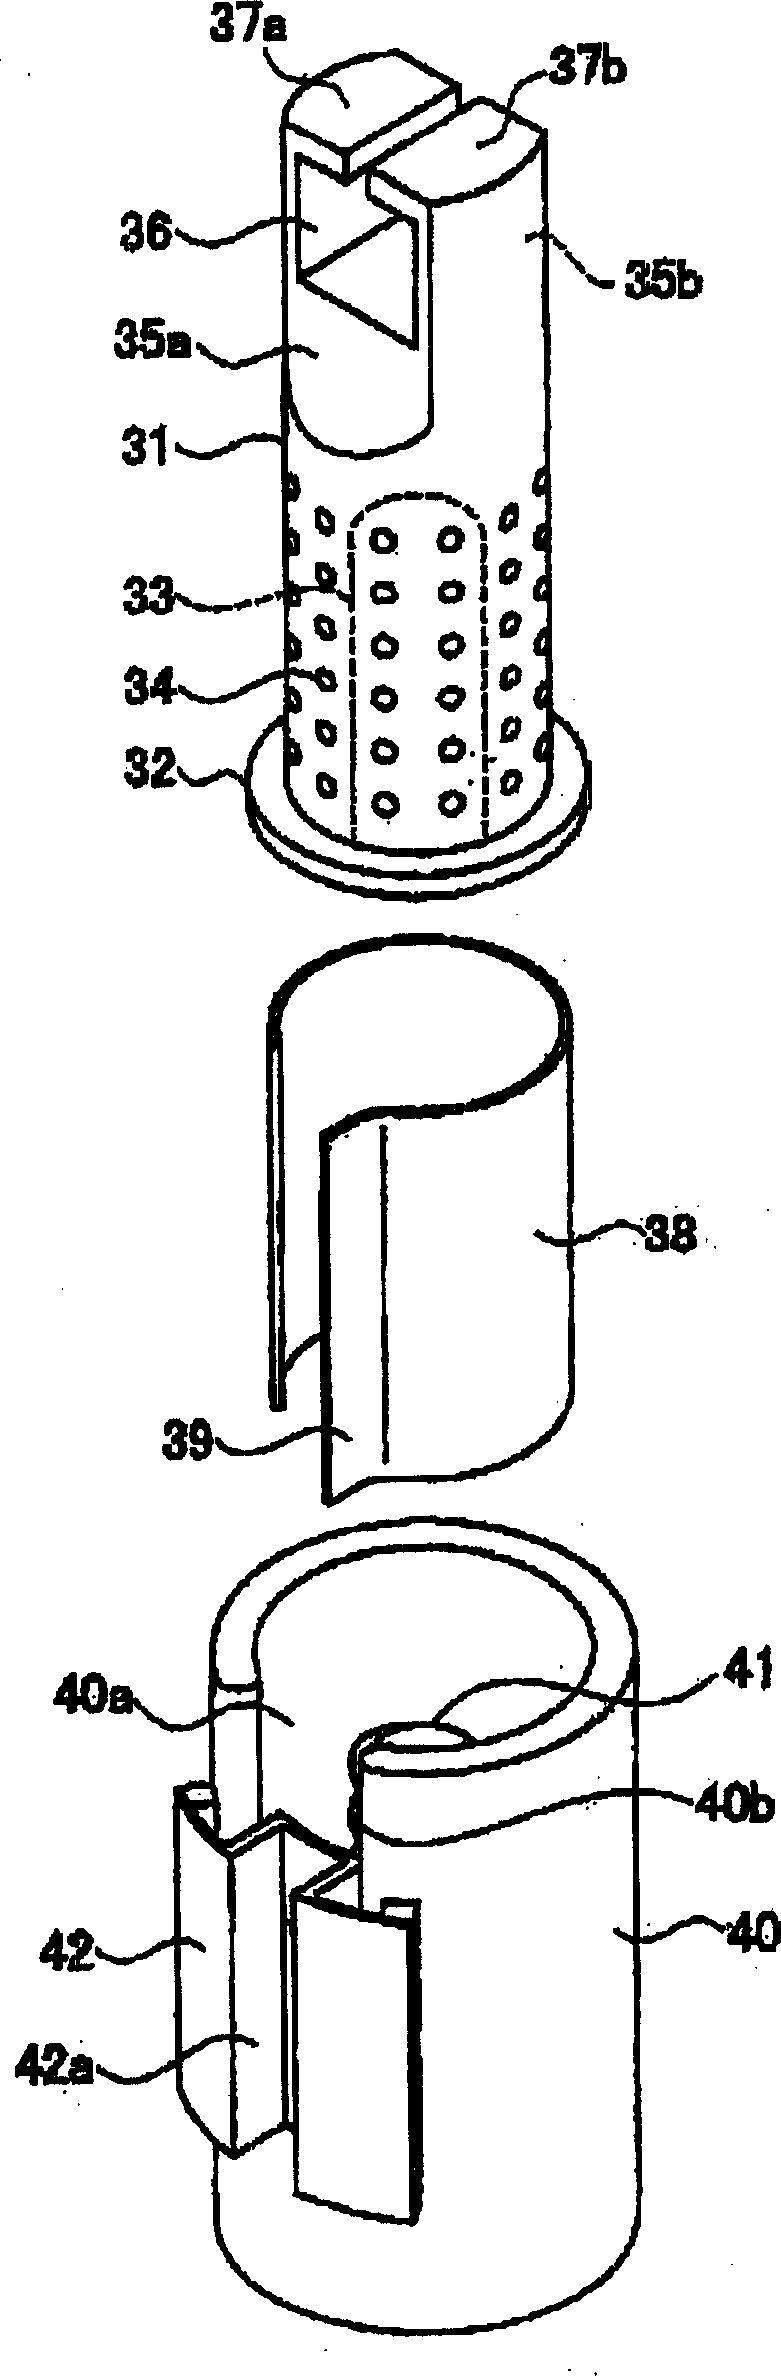 Hair curling apparatus and hair curling method